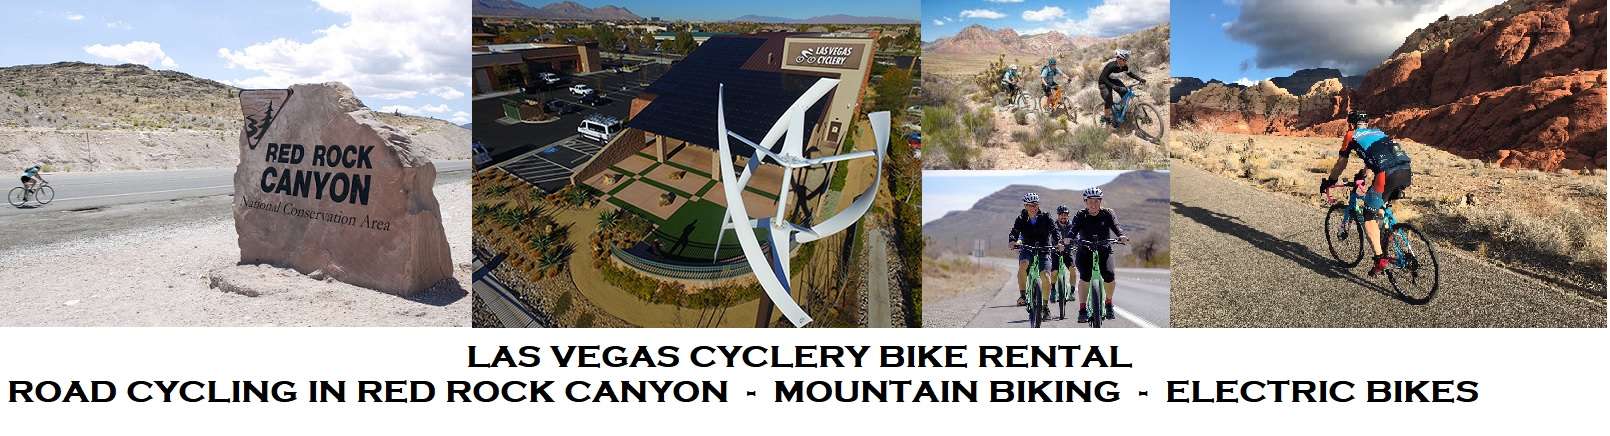 Rtc Permanently Adds 20 Electric Bikes To Downtown Las Vegas Bike Share Program Ksnv